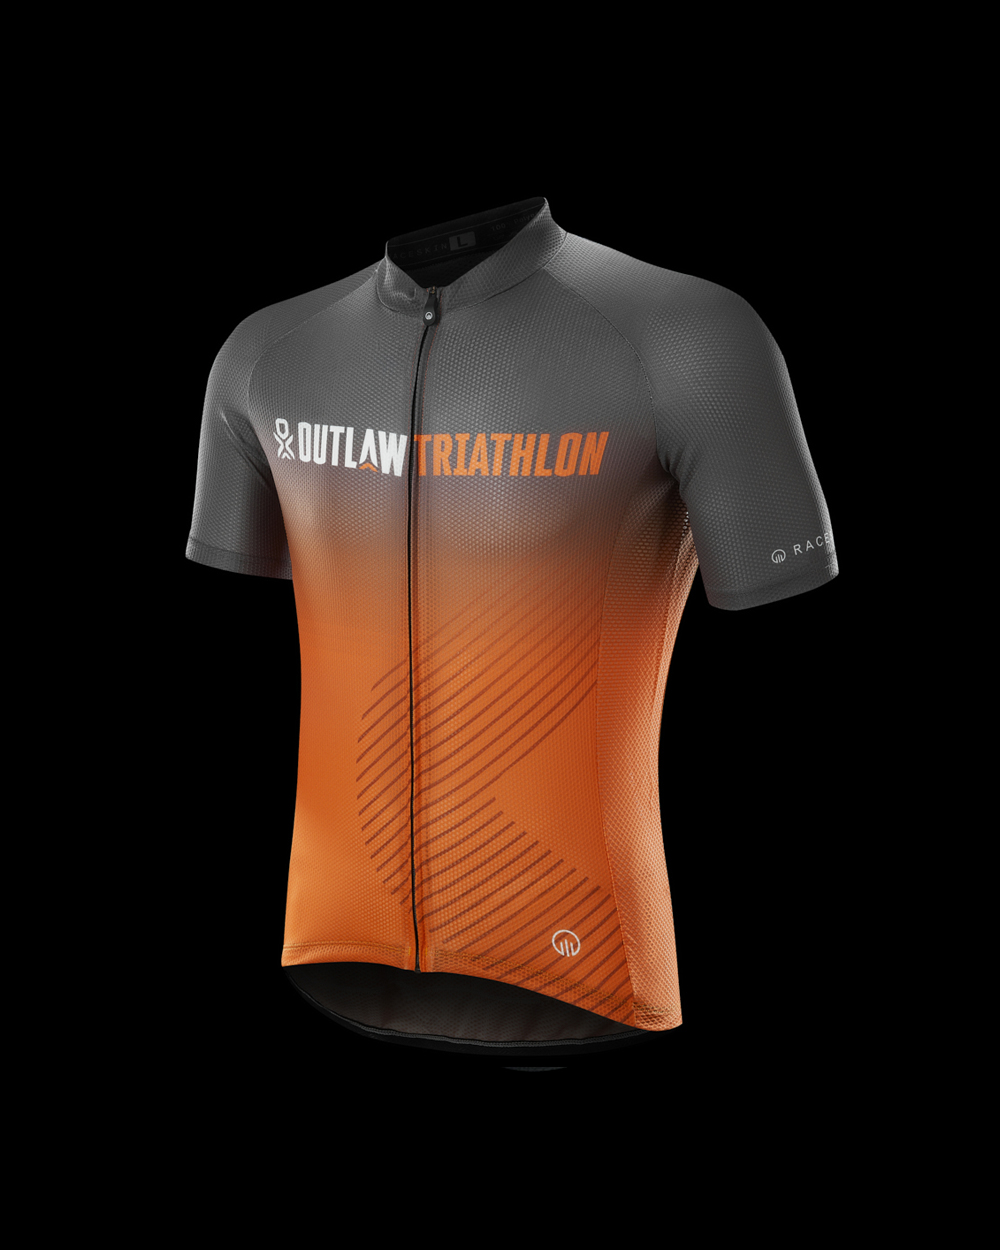 Outlaw Triathlon Cycling Jersey